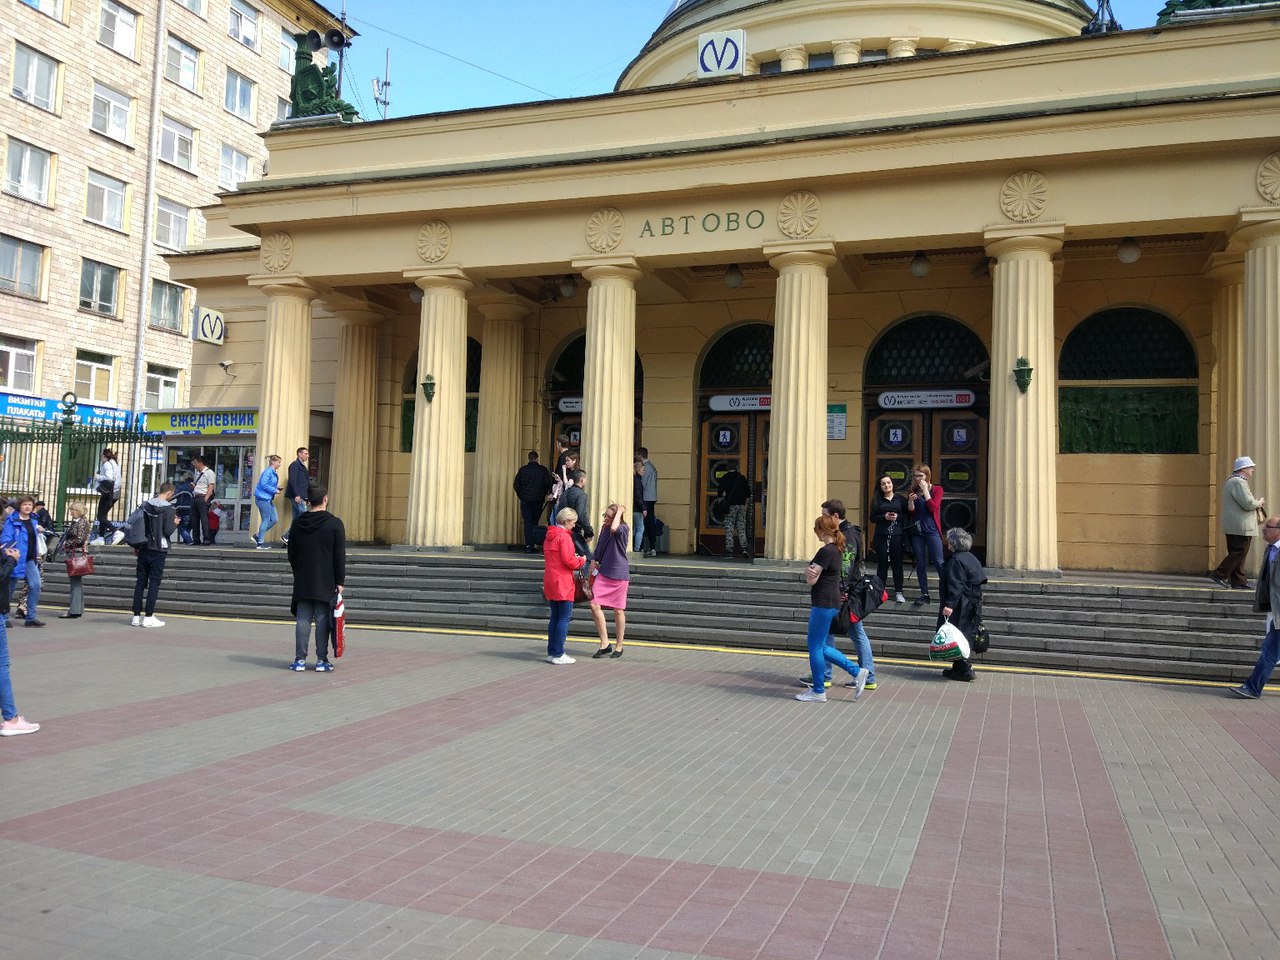 Станция "Автово" закрыта на вход и выход из-за бесхозного предмета